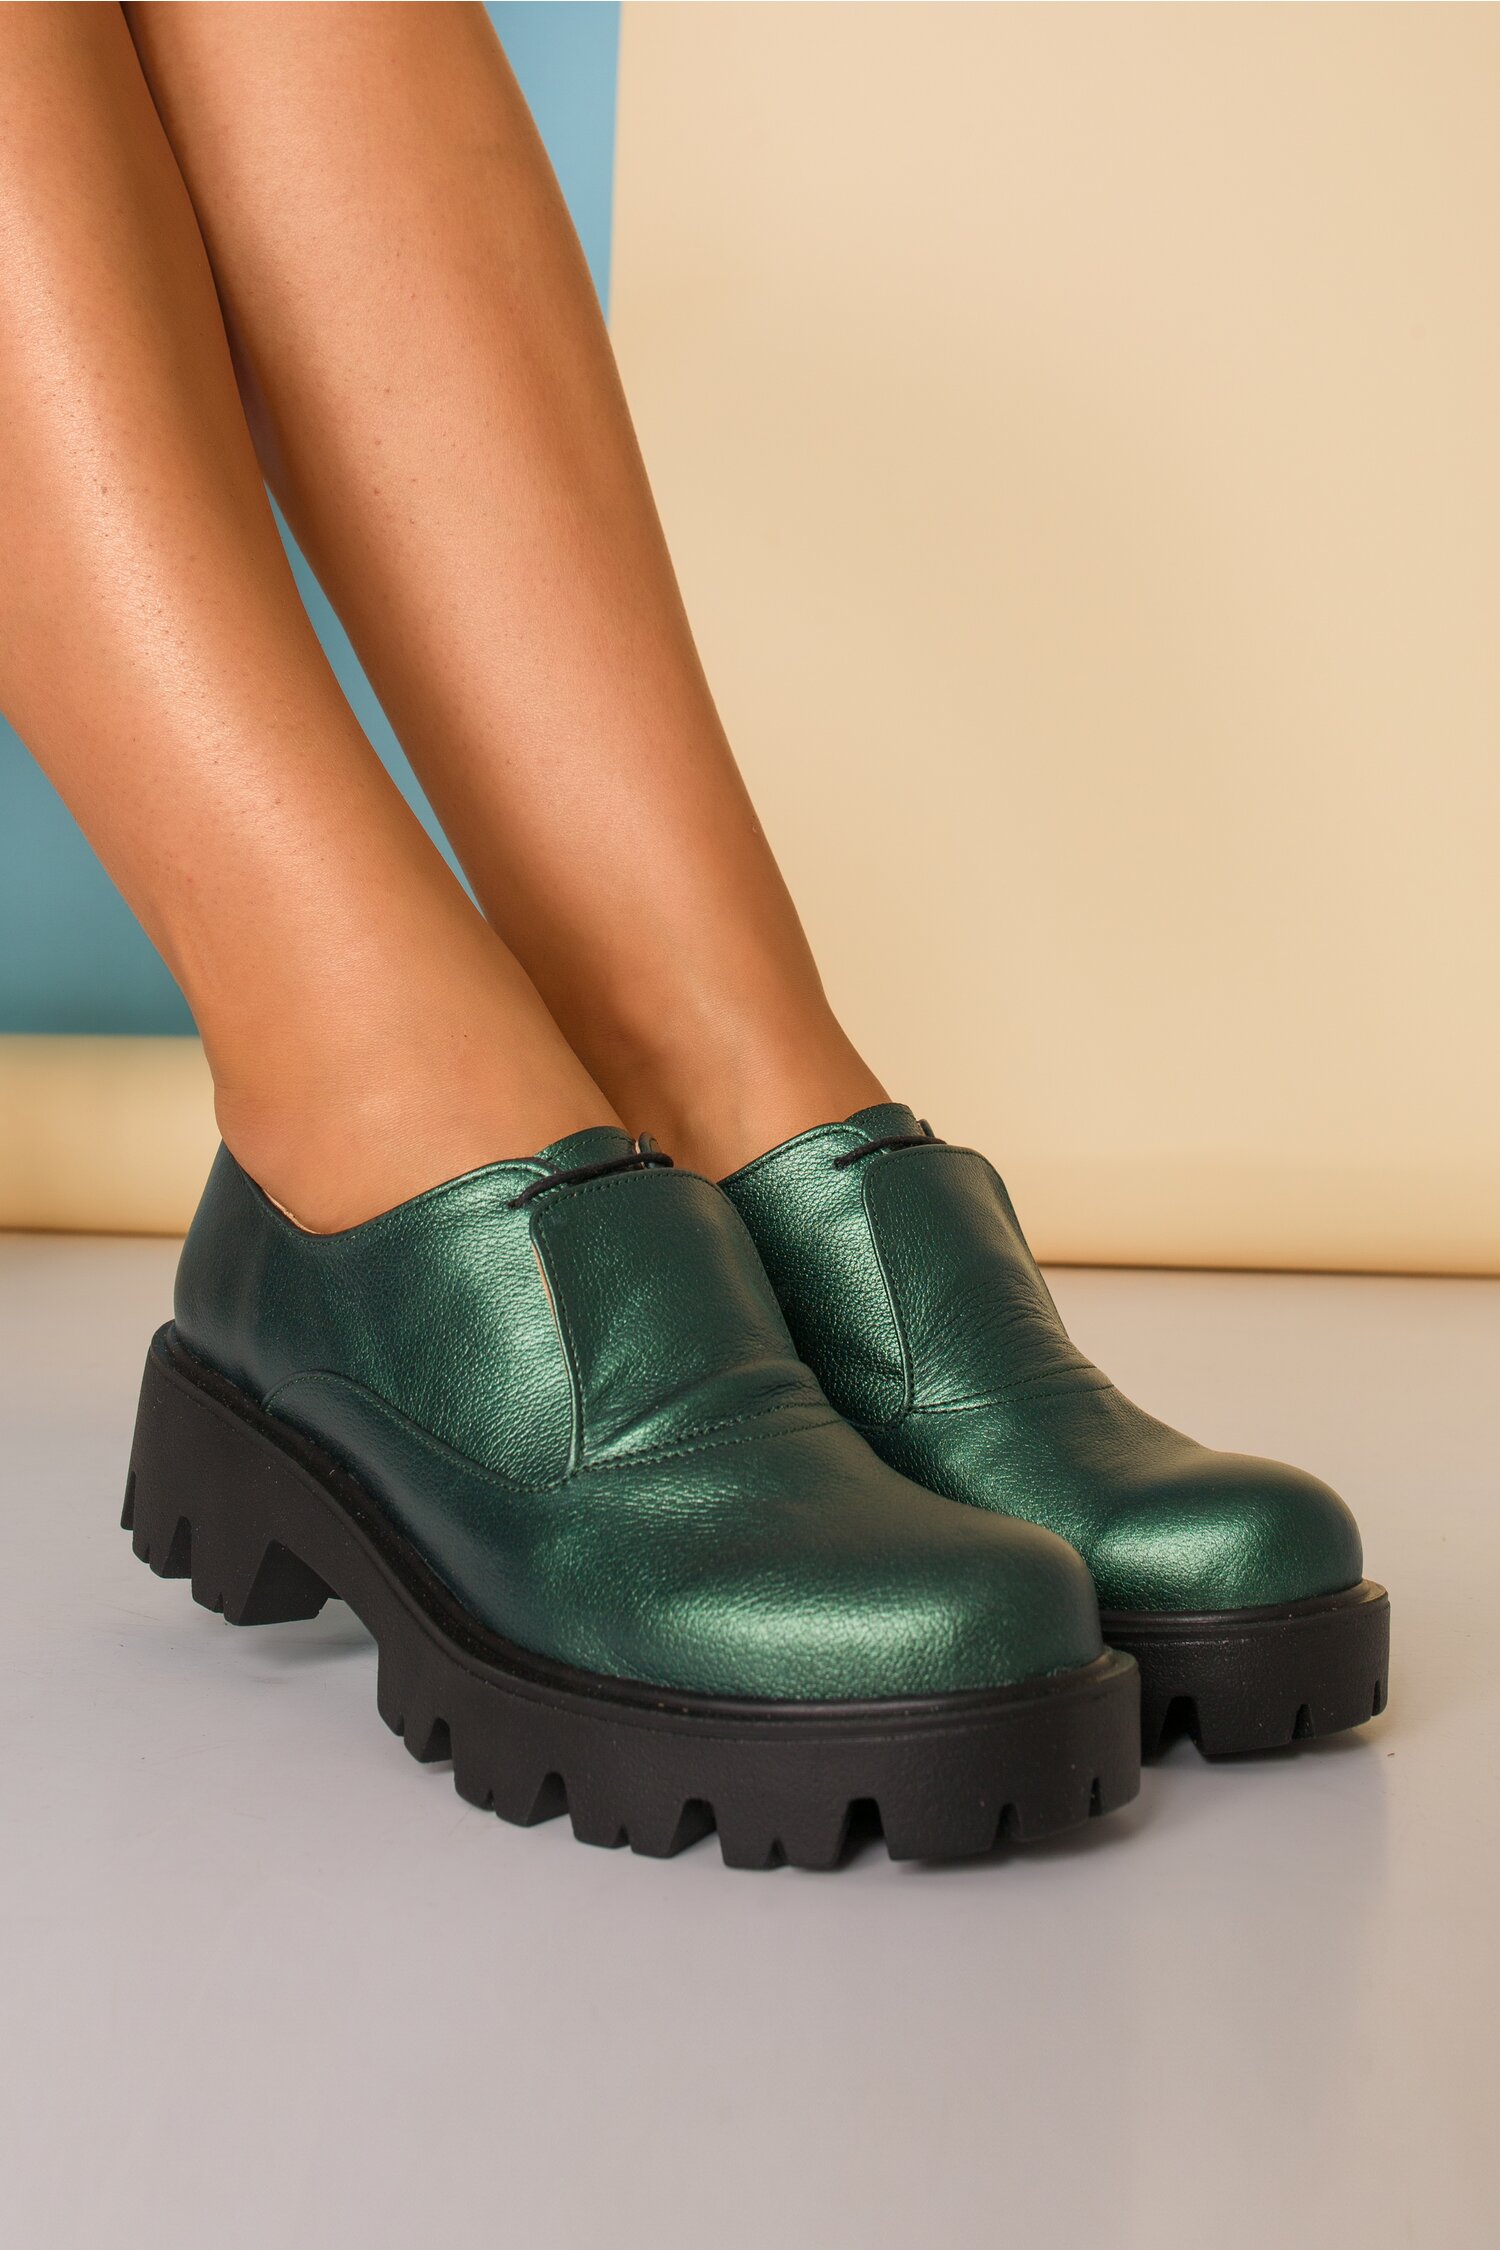 Pantofi verzi cu talpa joasa si limba dubla cu siret dyfashion.ro imagine 2022 13clothing.ro